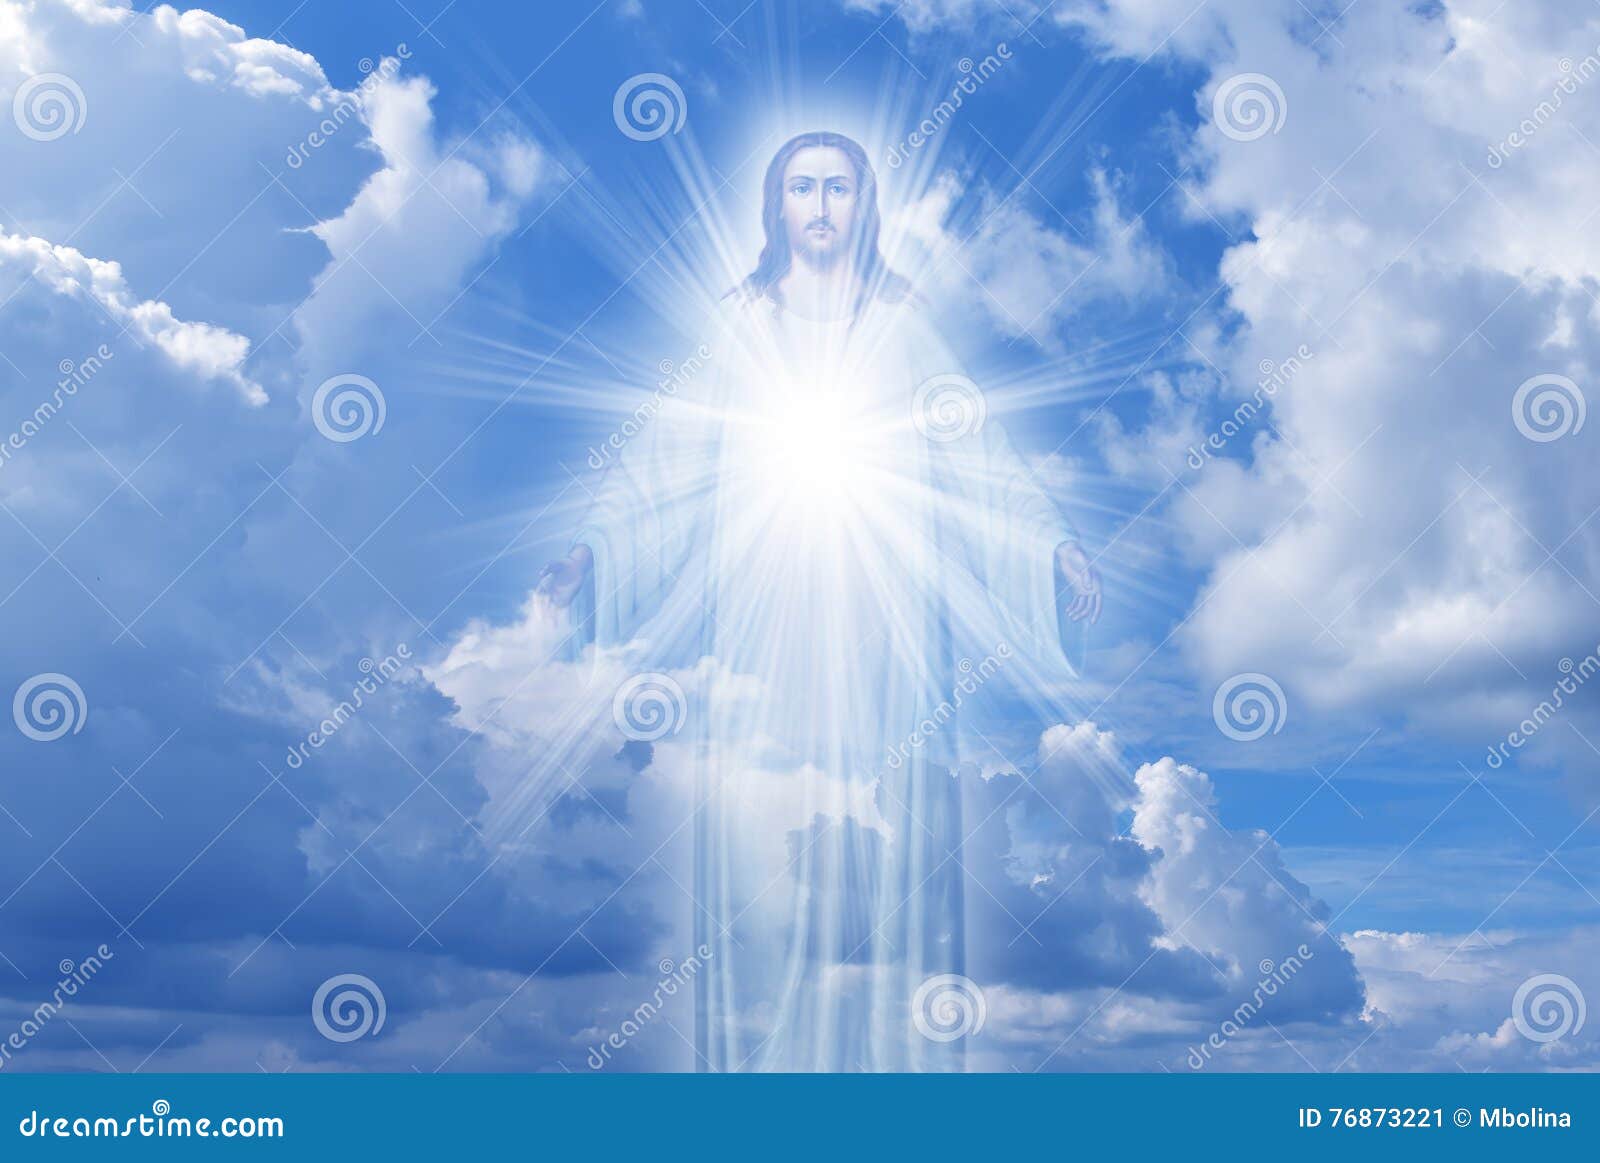 20,419 Jesus Christ Heaven Stock Photos - Free & Royalty-Free ...